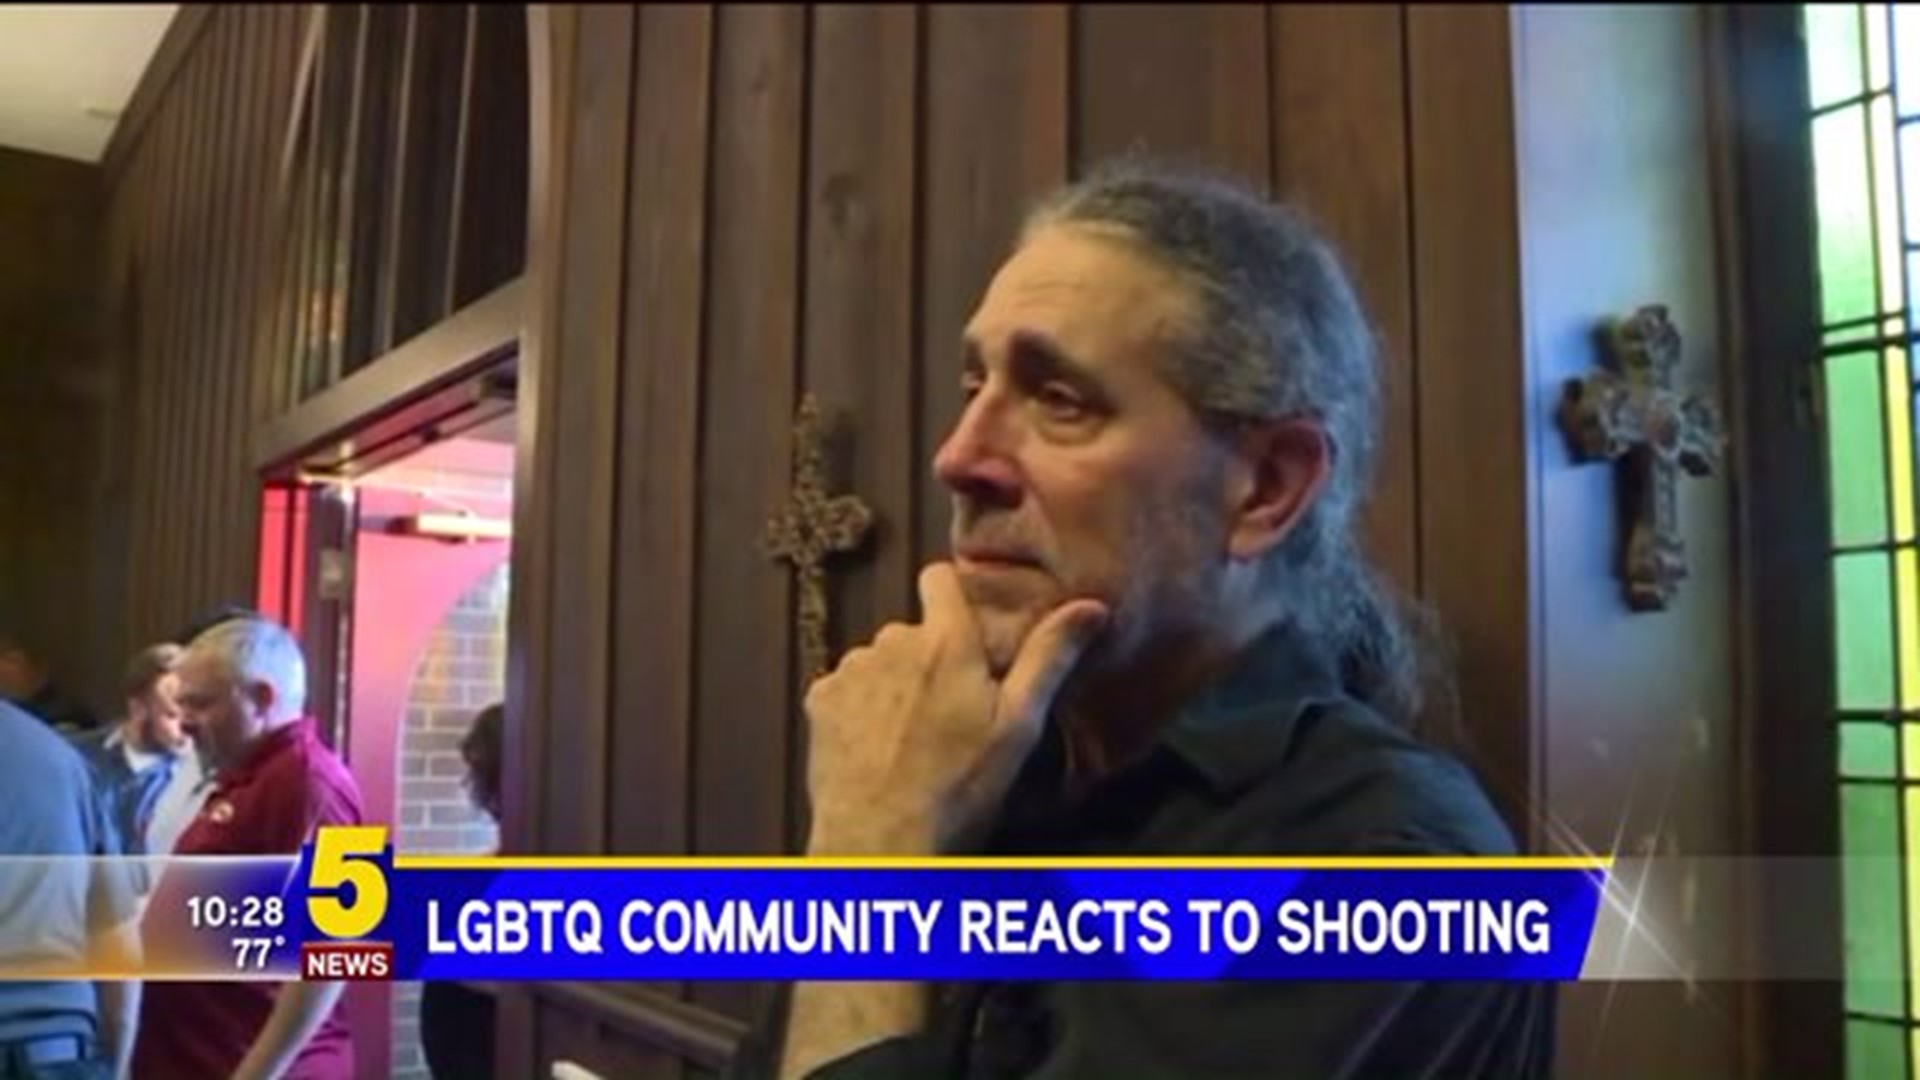 LGBTQ COMMUNITY REACTS TO SHOOTING